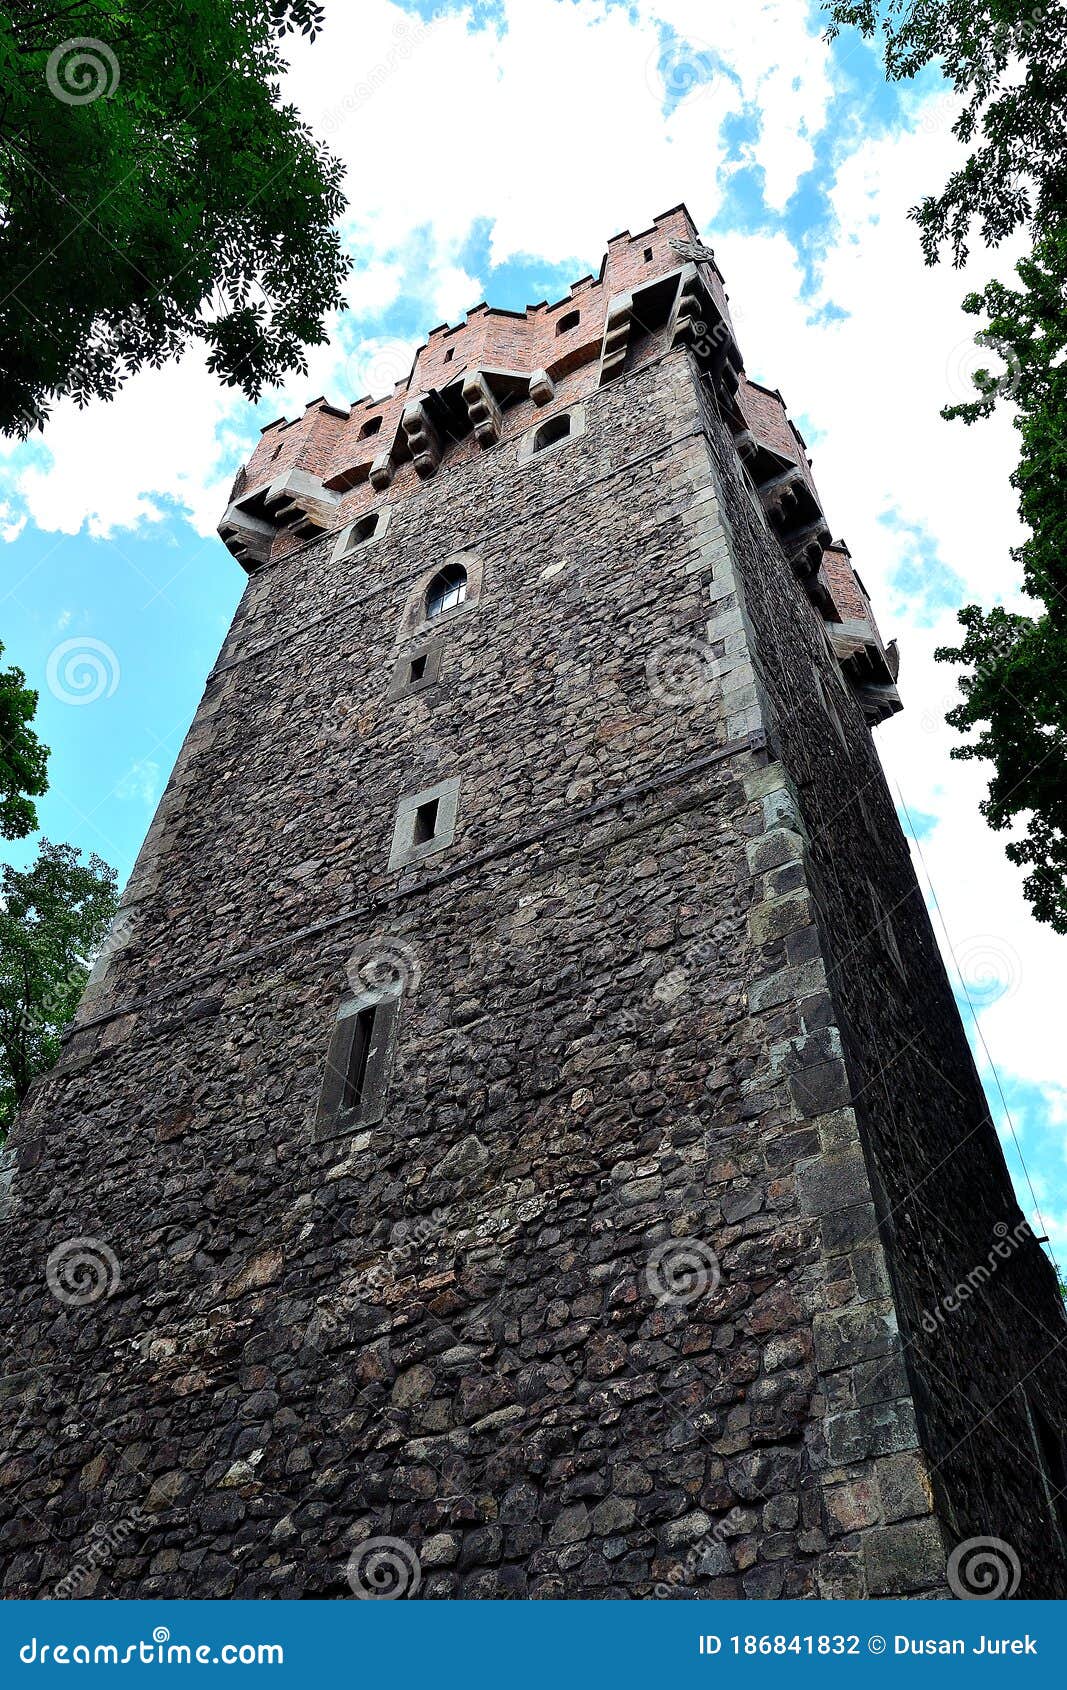 historic tower in the grounds of the castle in cieszyn, cieszyn, poland